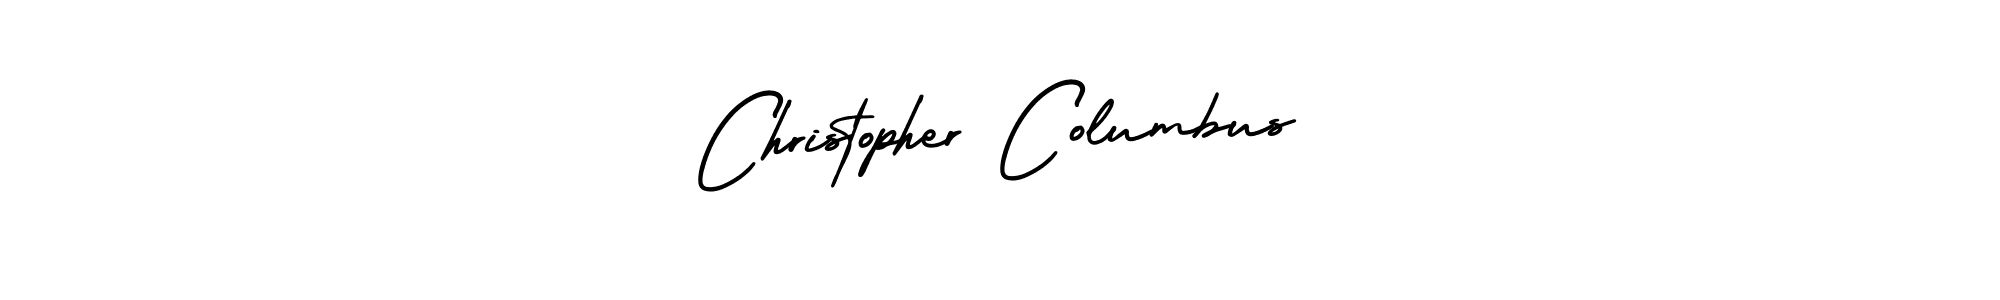 100+ Christopher Columbus Name Signature Style Ideas | Perfect Autograph